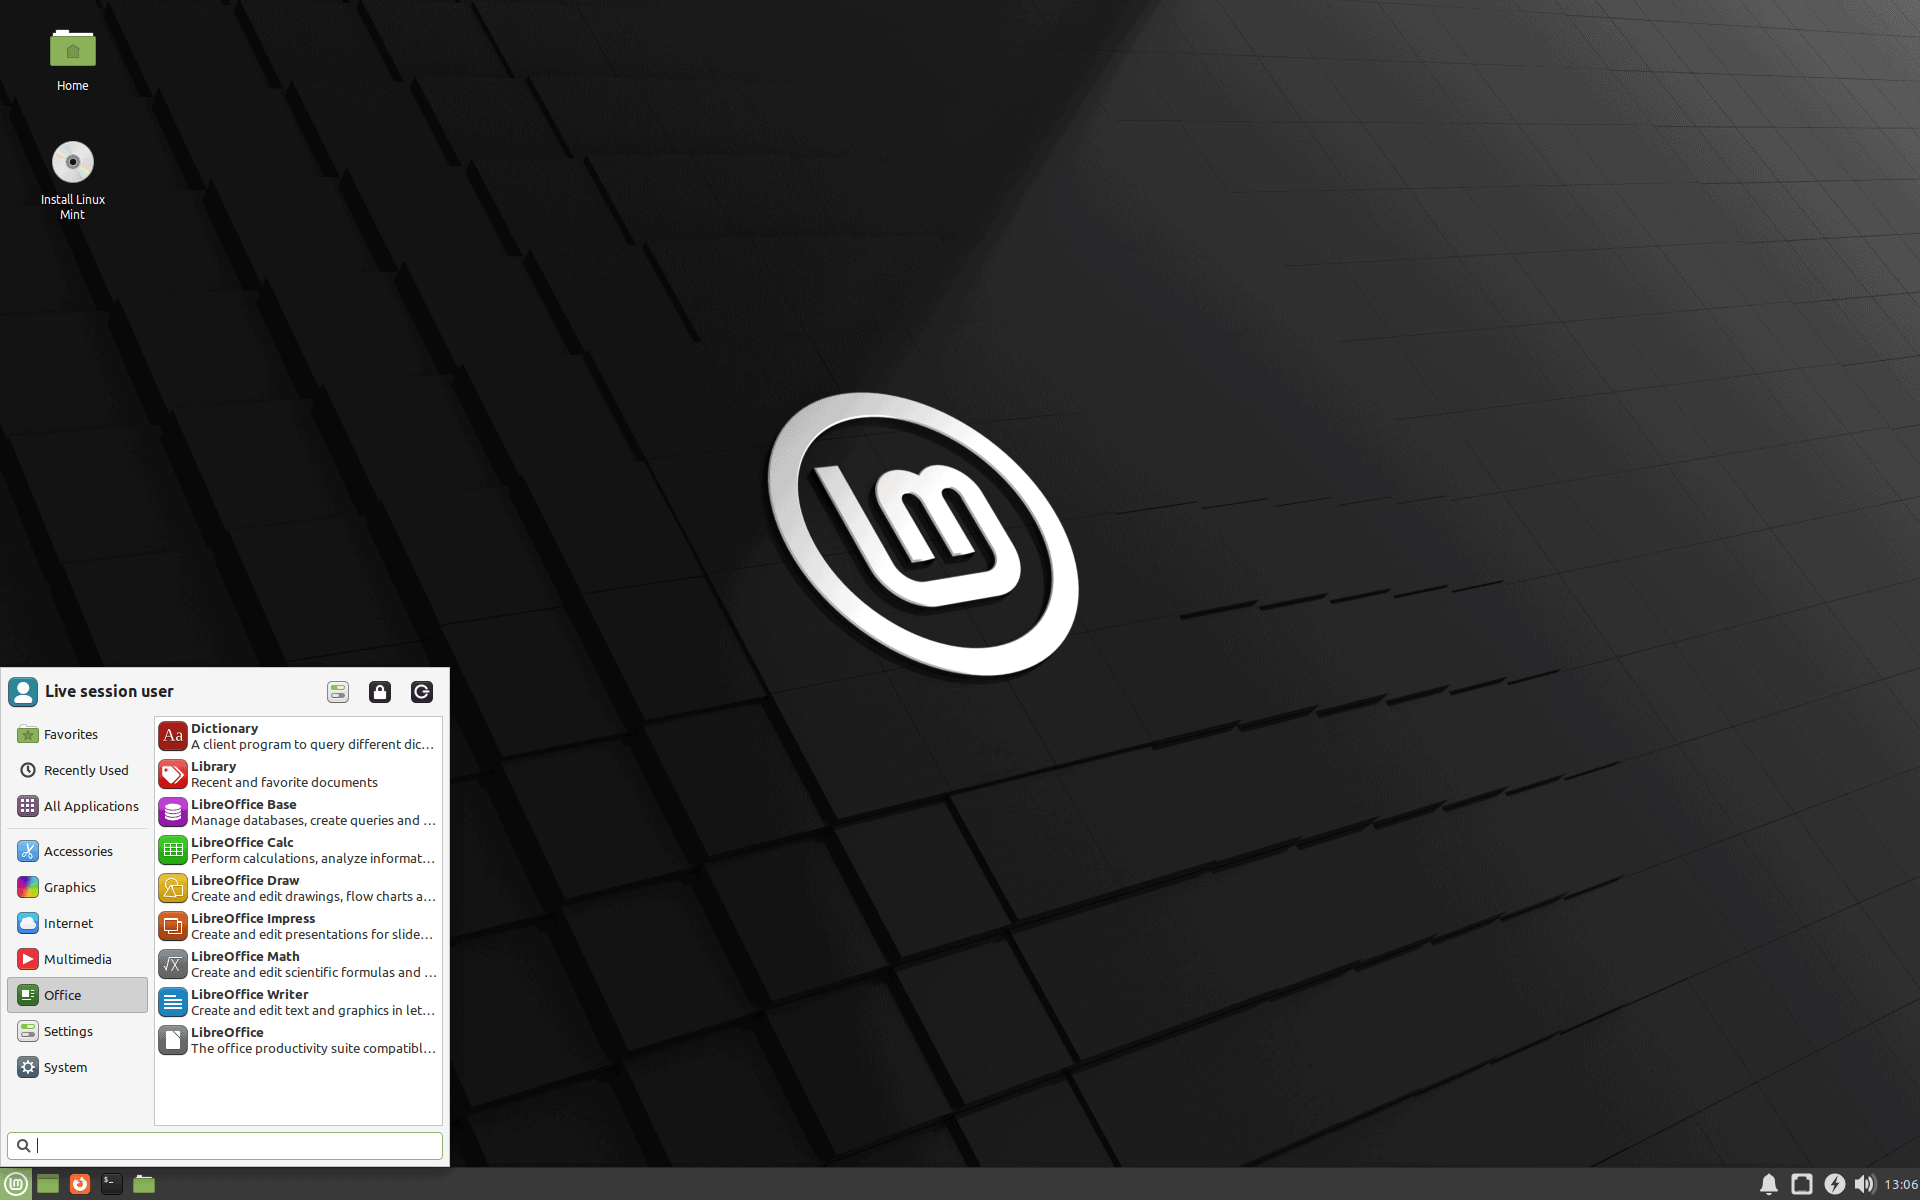 linux-mint-20.3-release